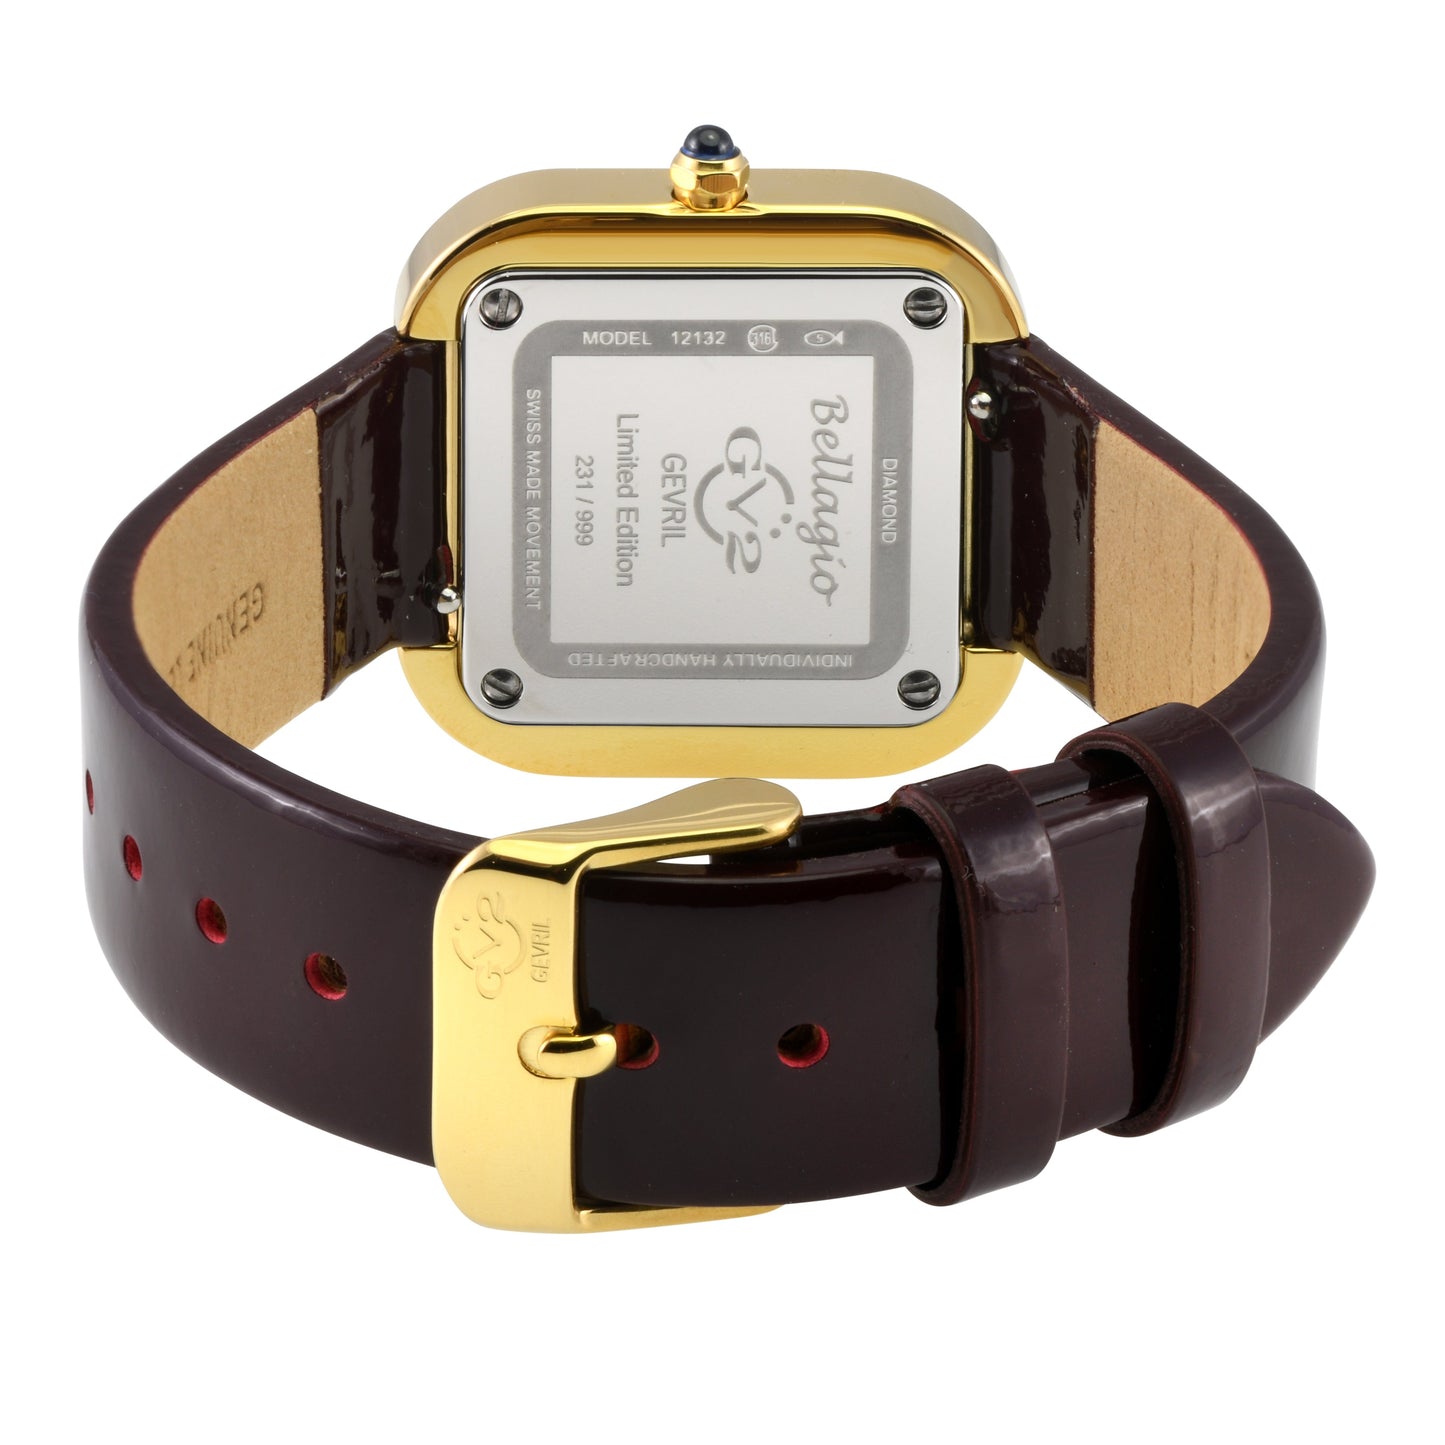 Gevril-Luxury-Swiss-Watches-GV2 Bellagio Diamond-12132